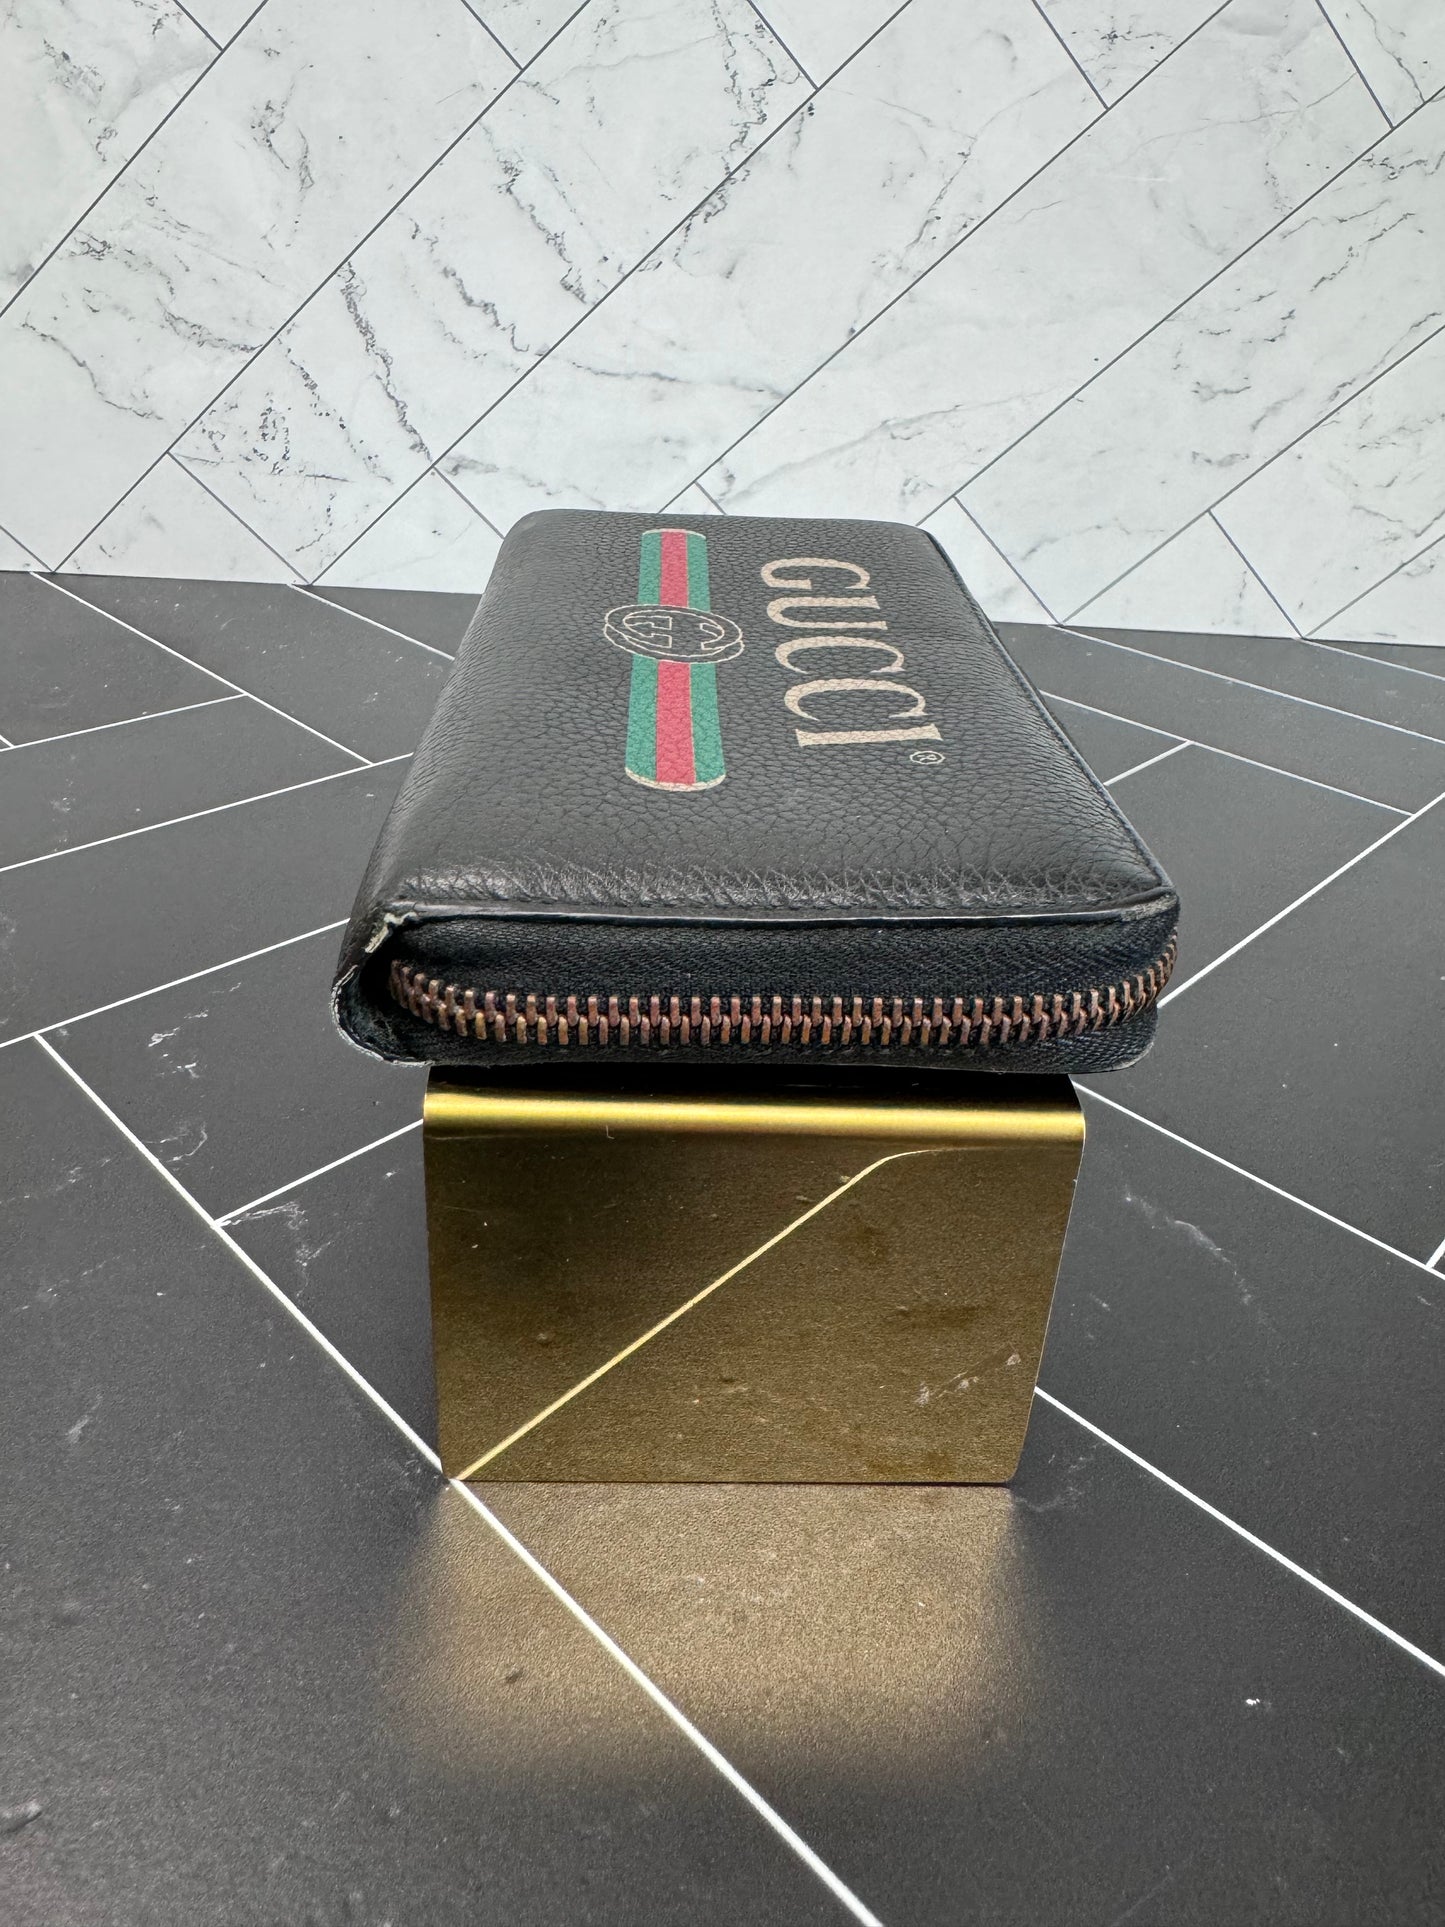 Gucci Black Leather Logo Zippy Wallet